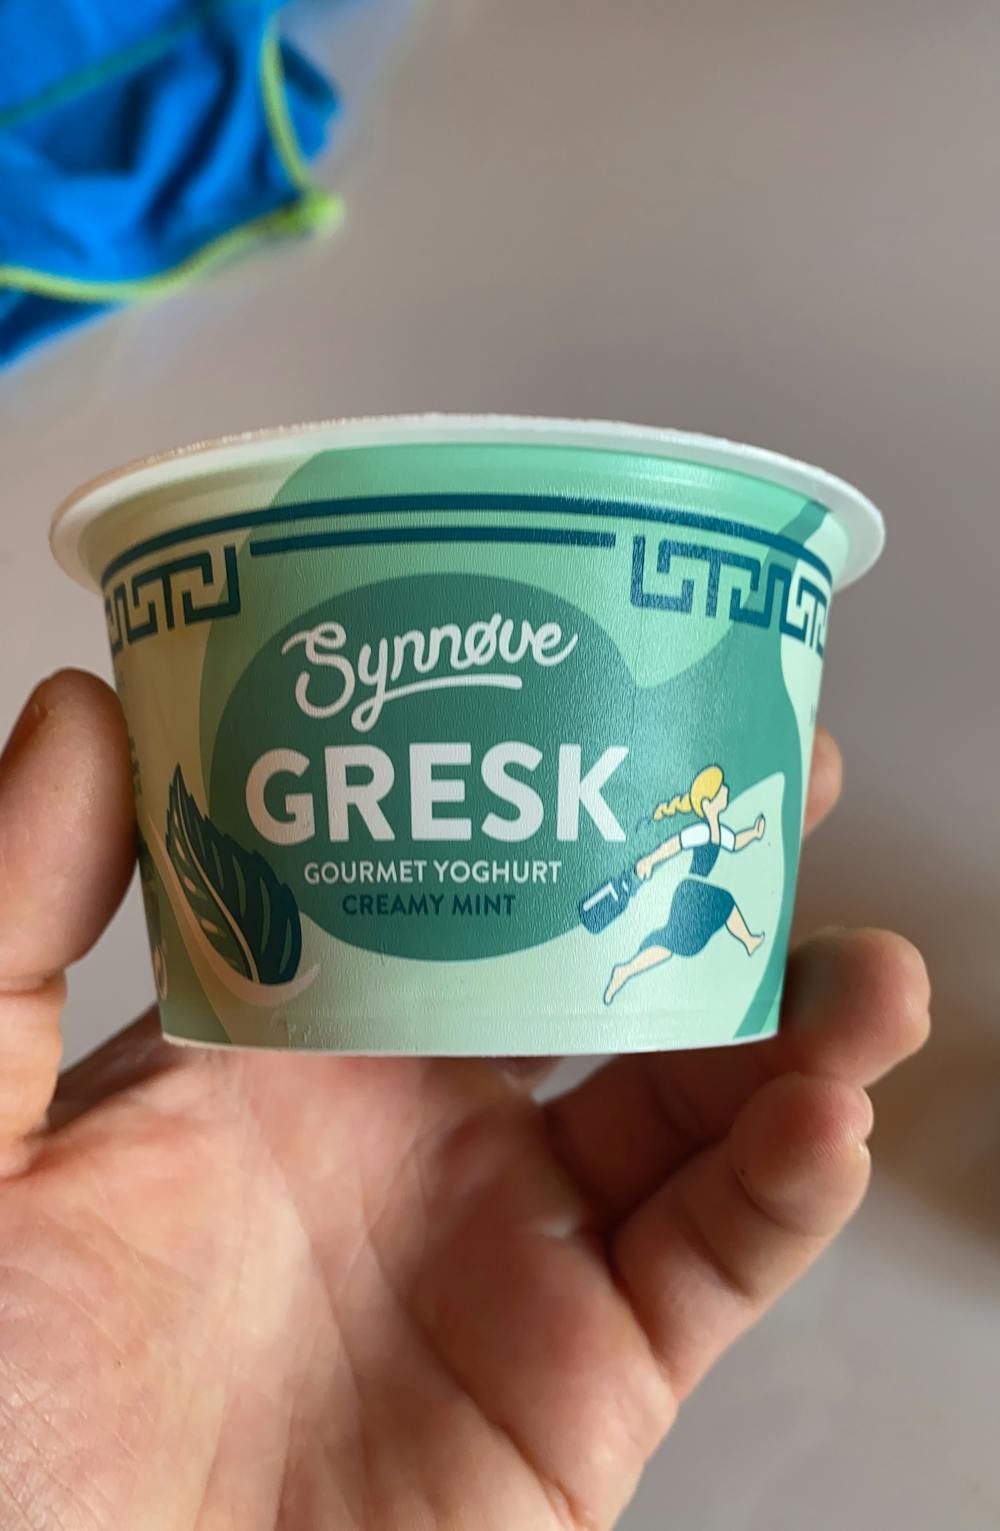 Gresk yoghurt, creamy mint, Synnøve